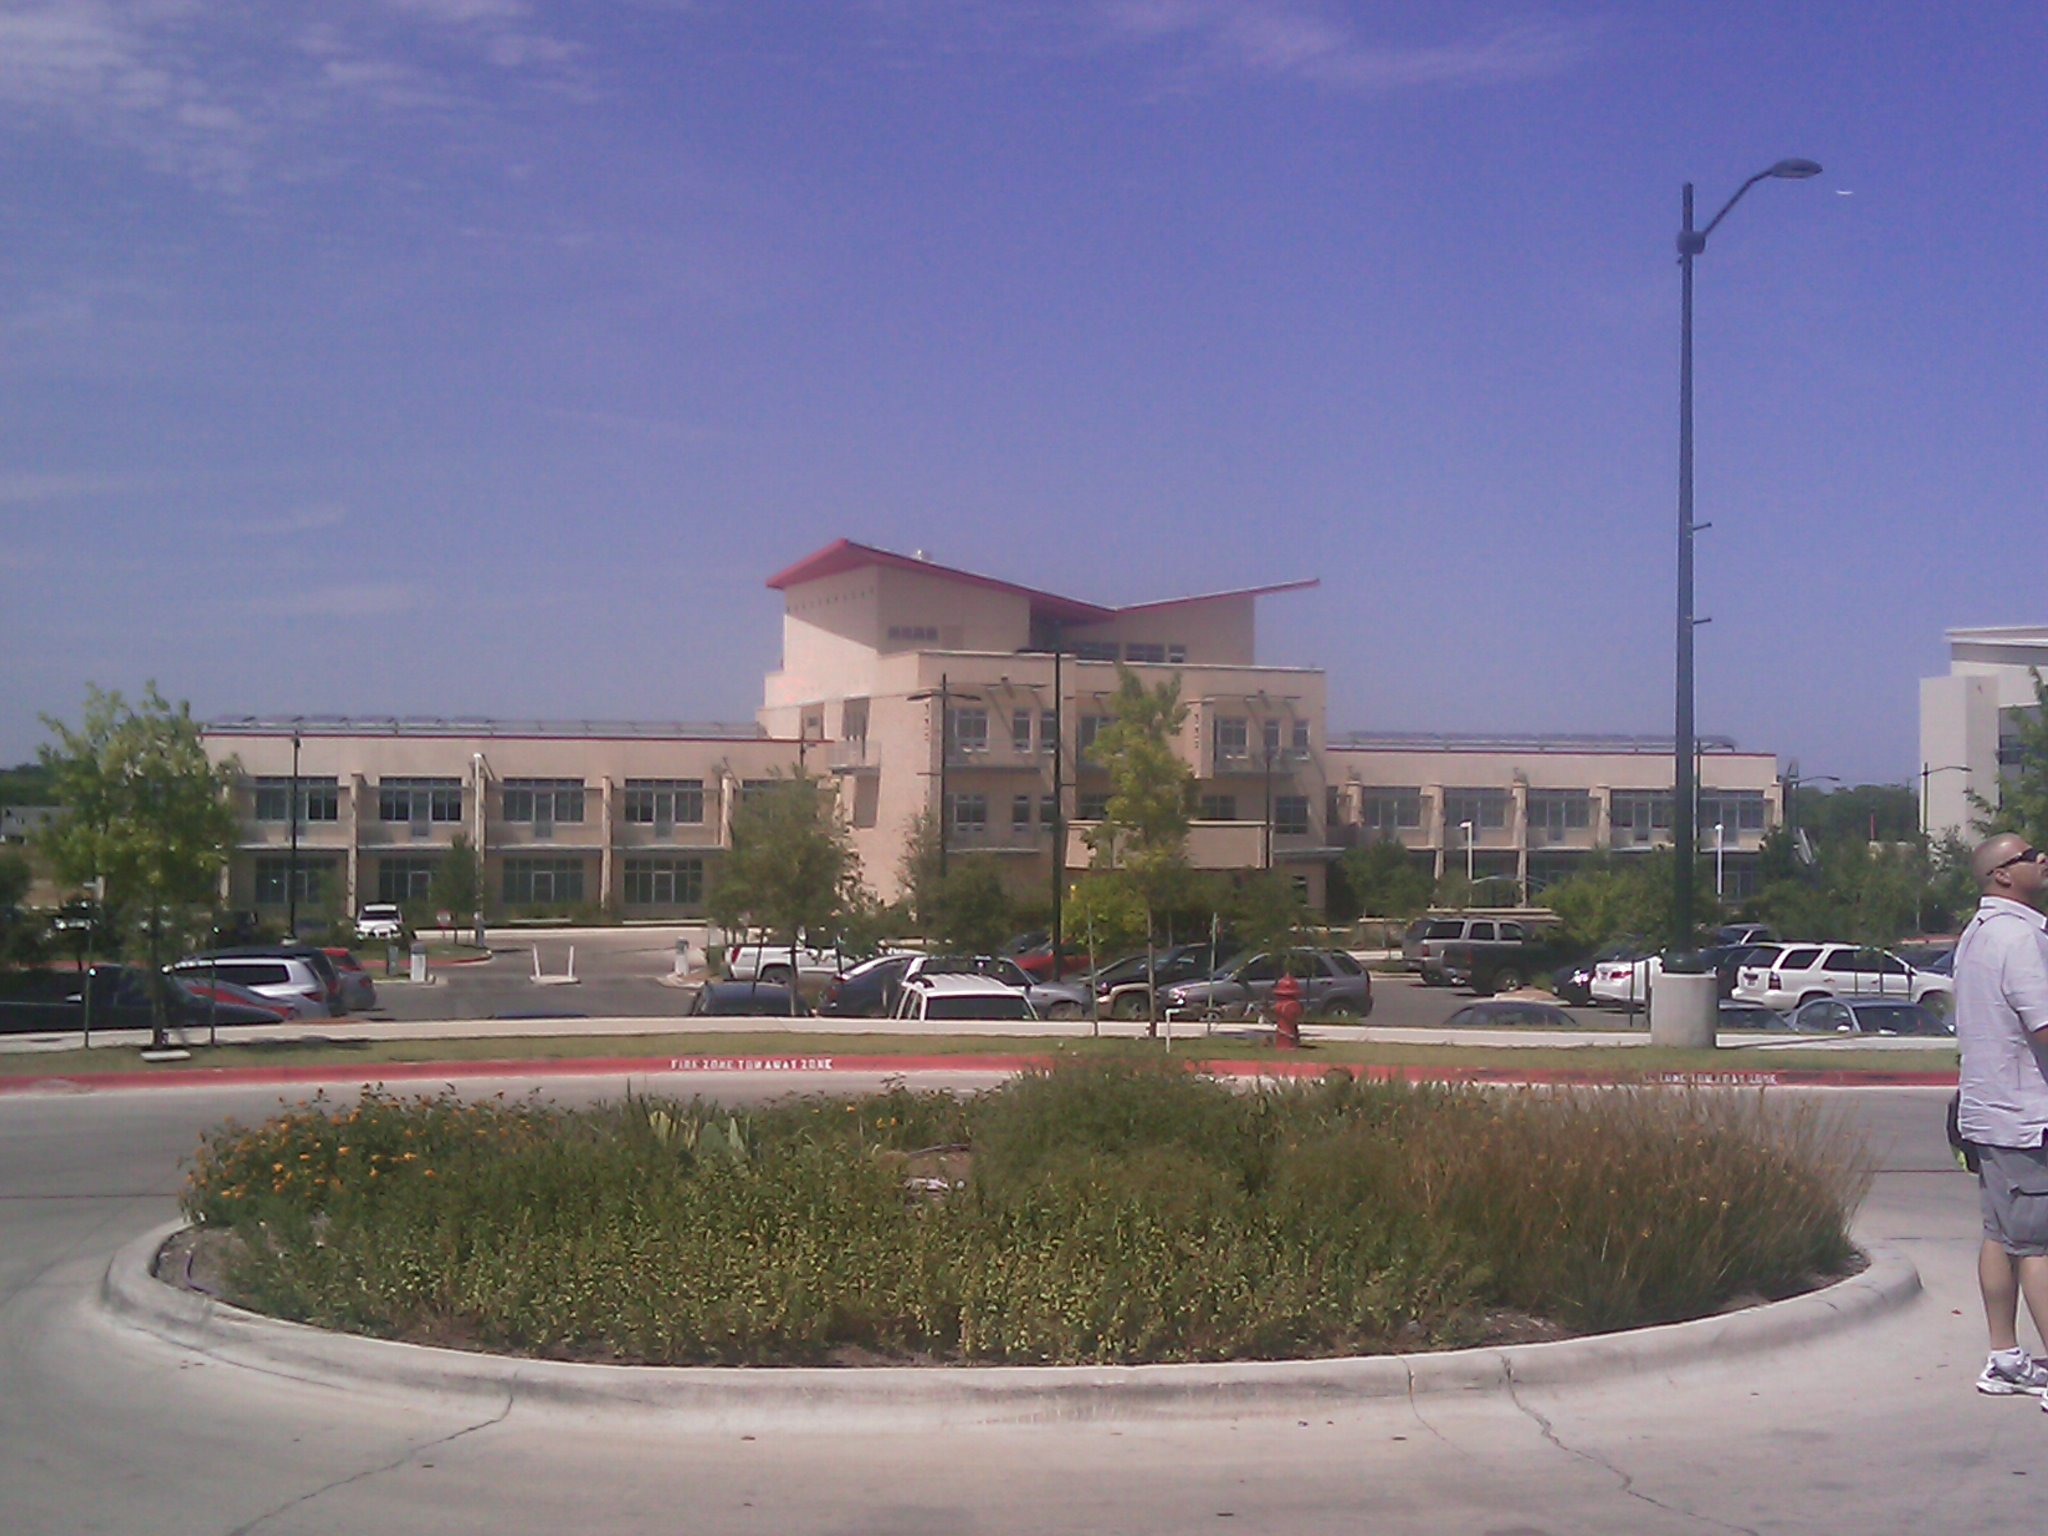 Dell Children’s Medical Center of Central Texas